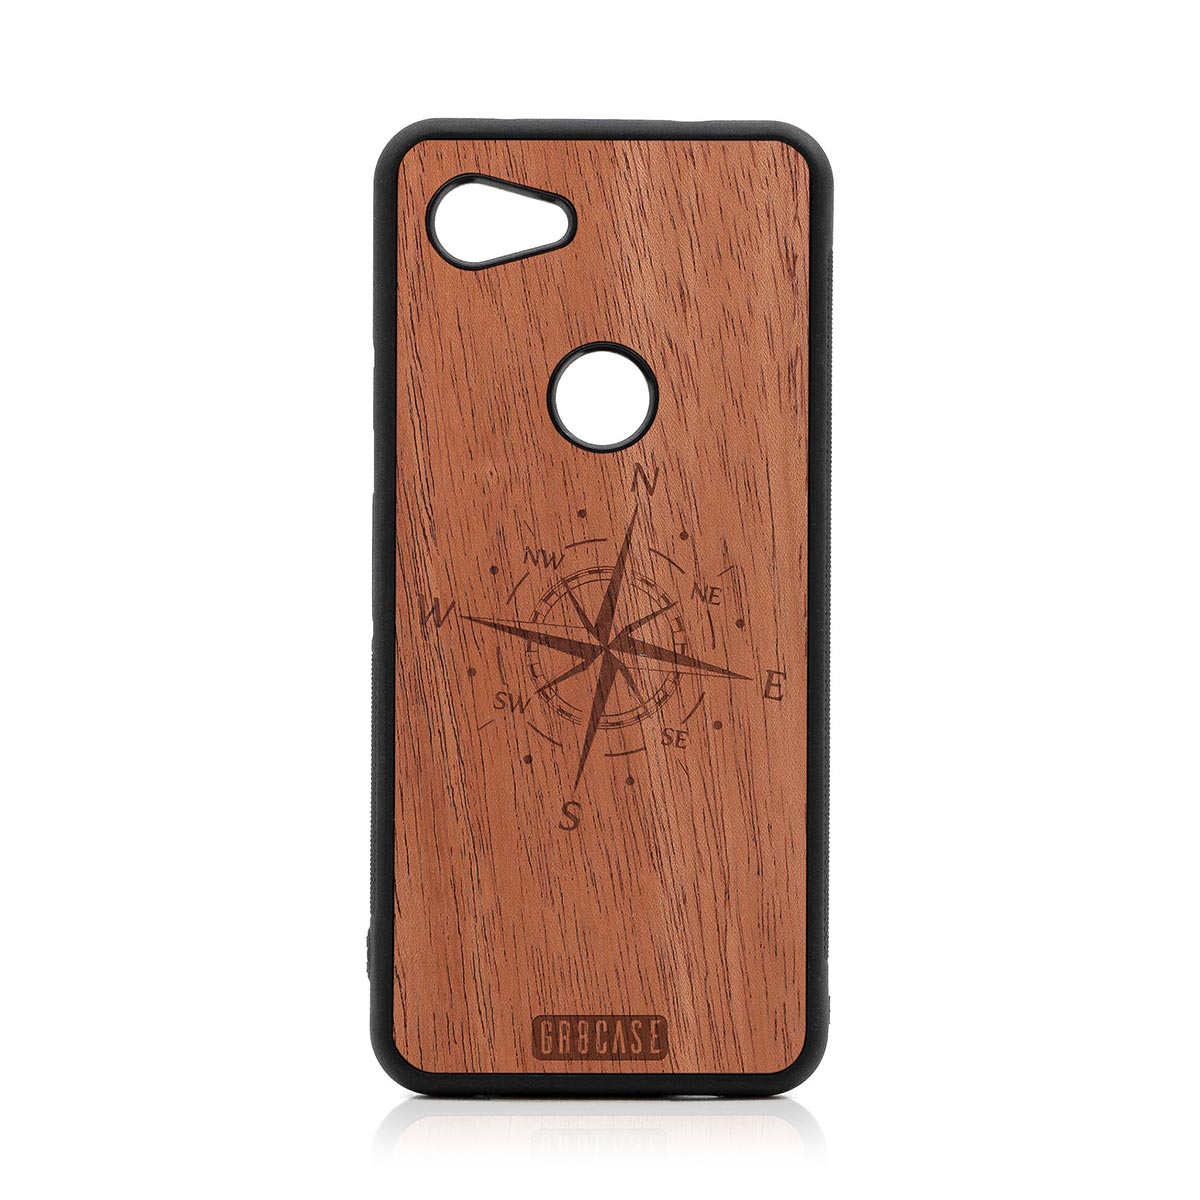 Compass Design Wood Case Google Pixel 3A XL by GR8CASE